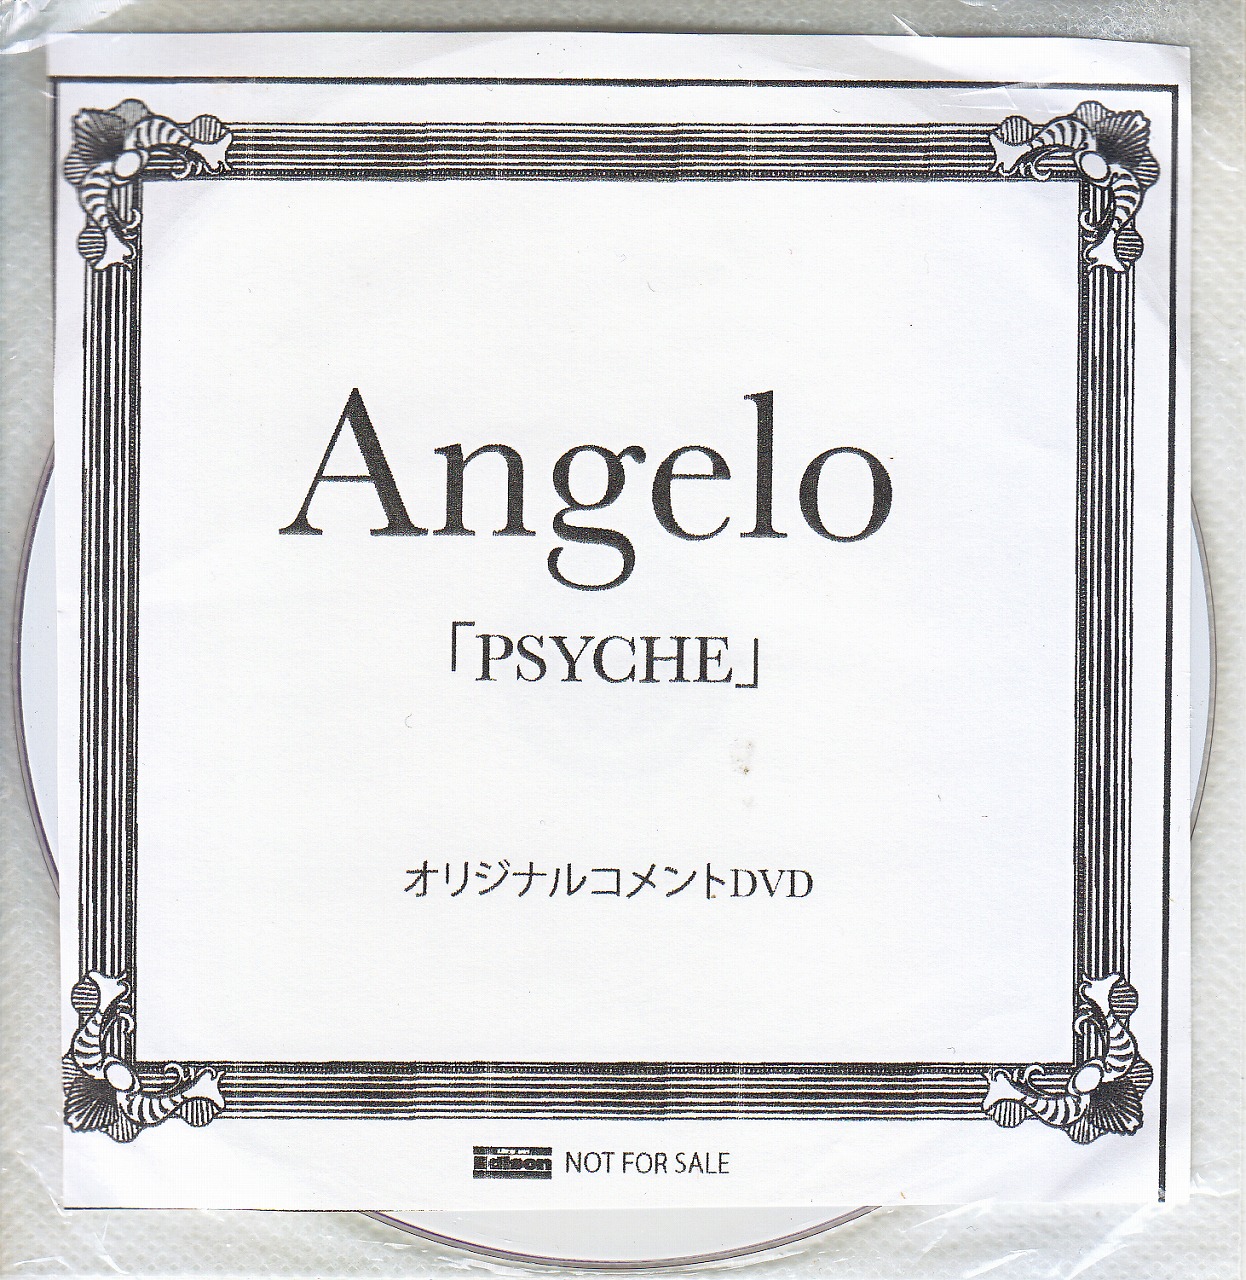 Angelo ( アンジェロ )  の DVD 【LIKE AN EDISON】「PSYCHE」オリジナルコメントDVD